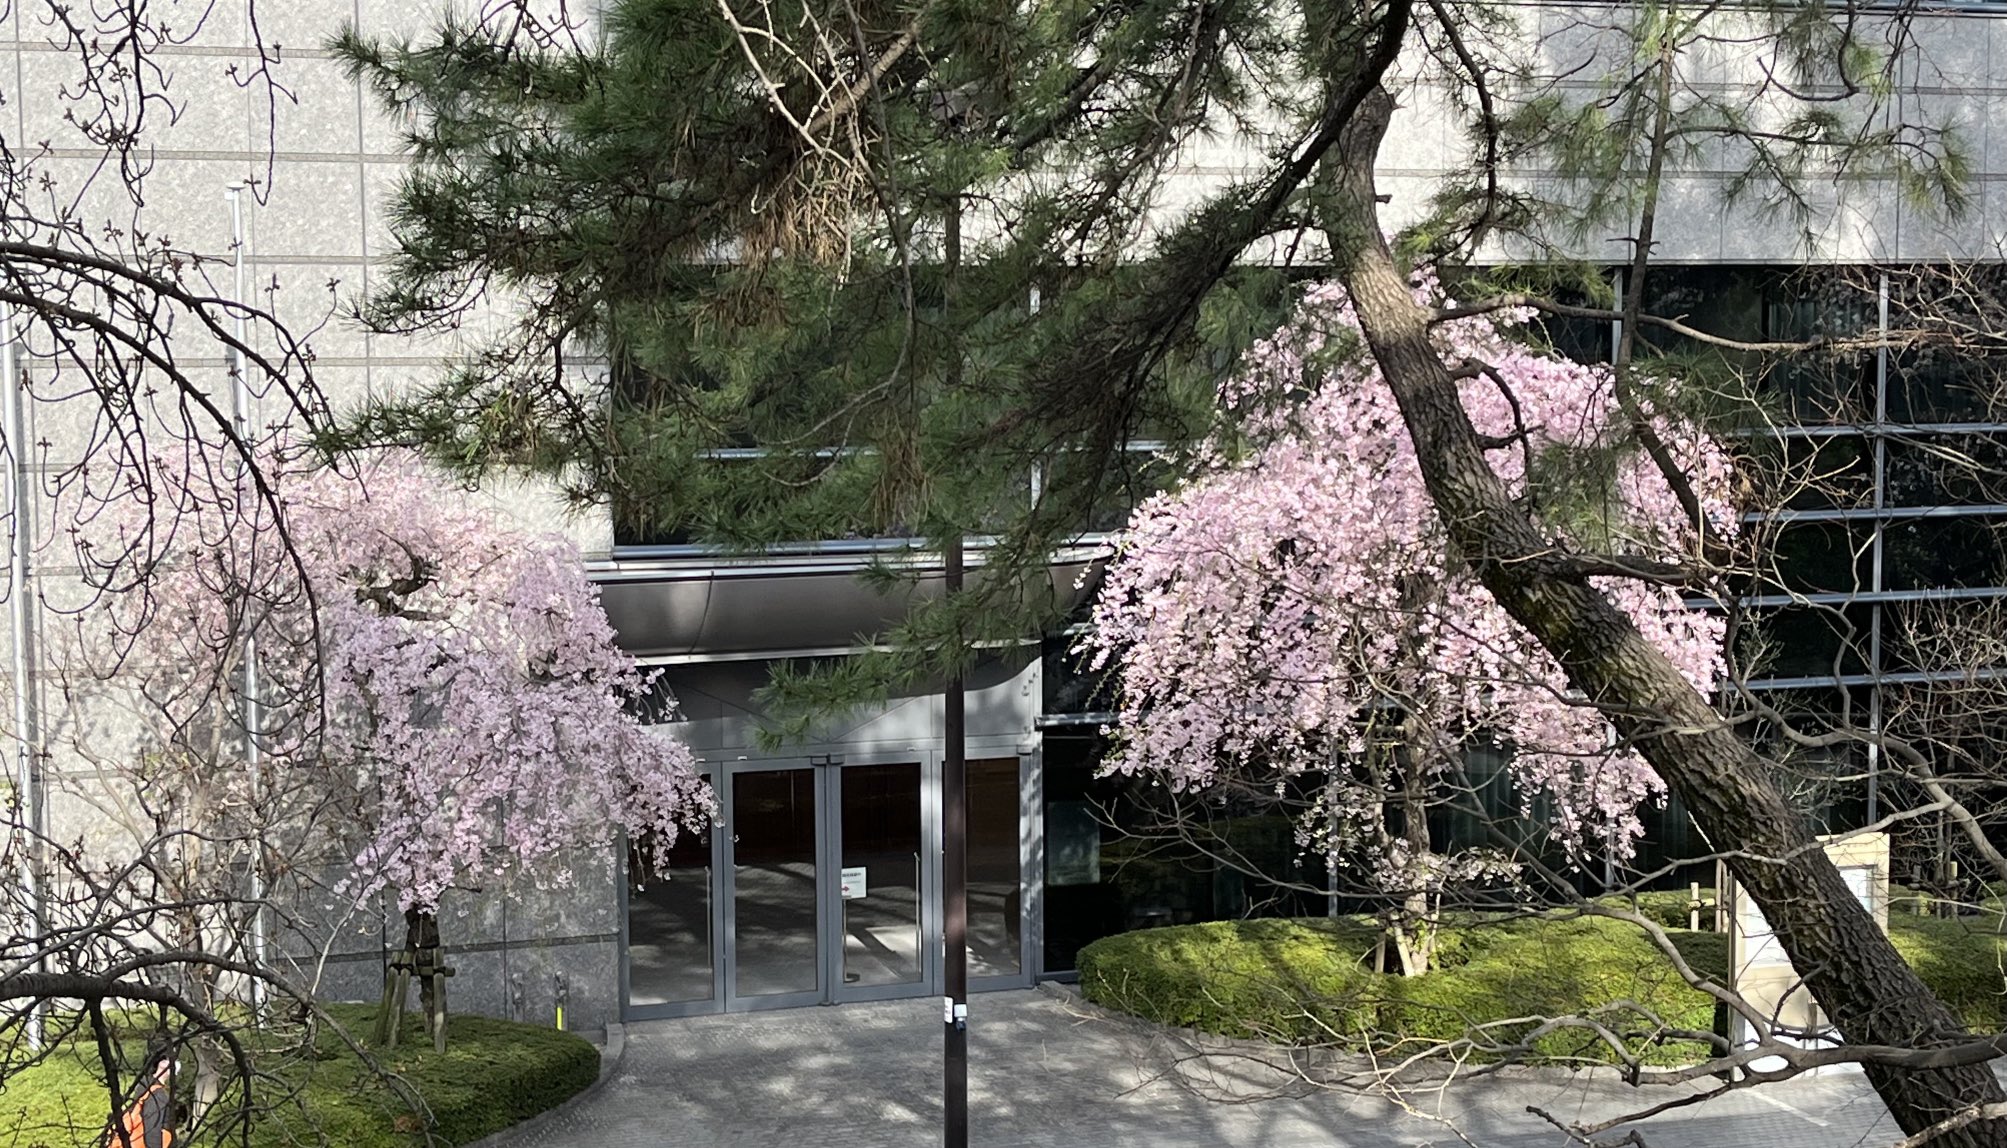 تويتر Mami على تويتر ランチのあとは四ツ谷の上智大の近くを桜を目でながら散策 綺麗な桜 に心がほっこりします T Co Qxxsbrixtt